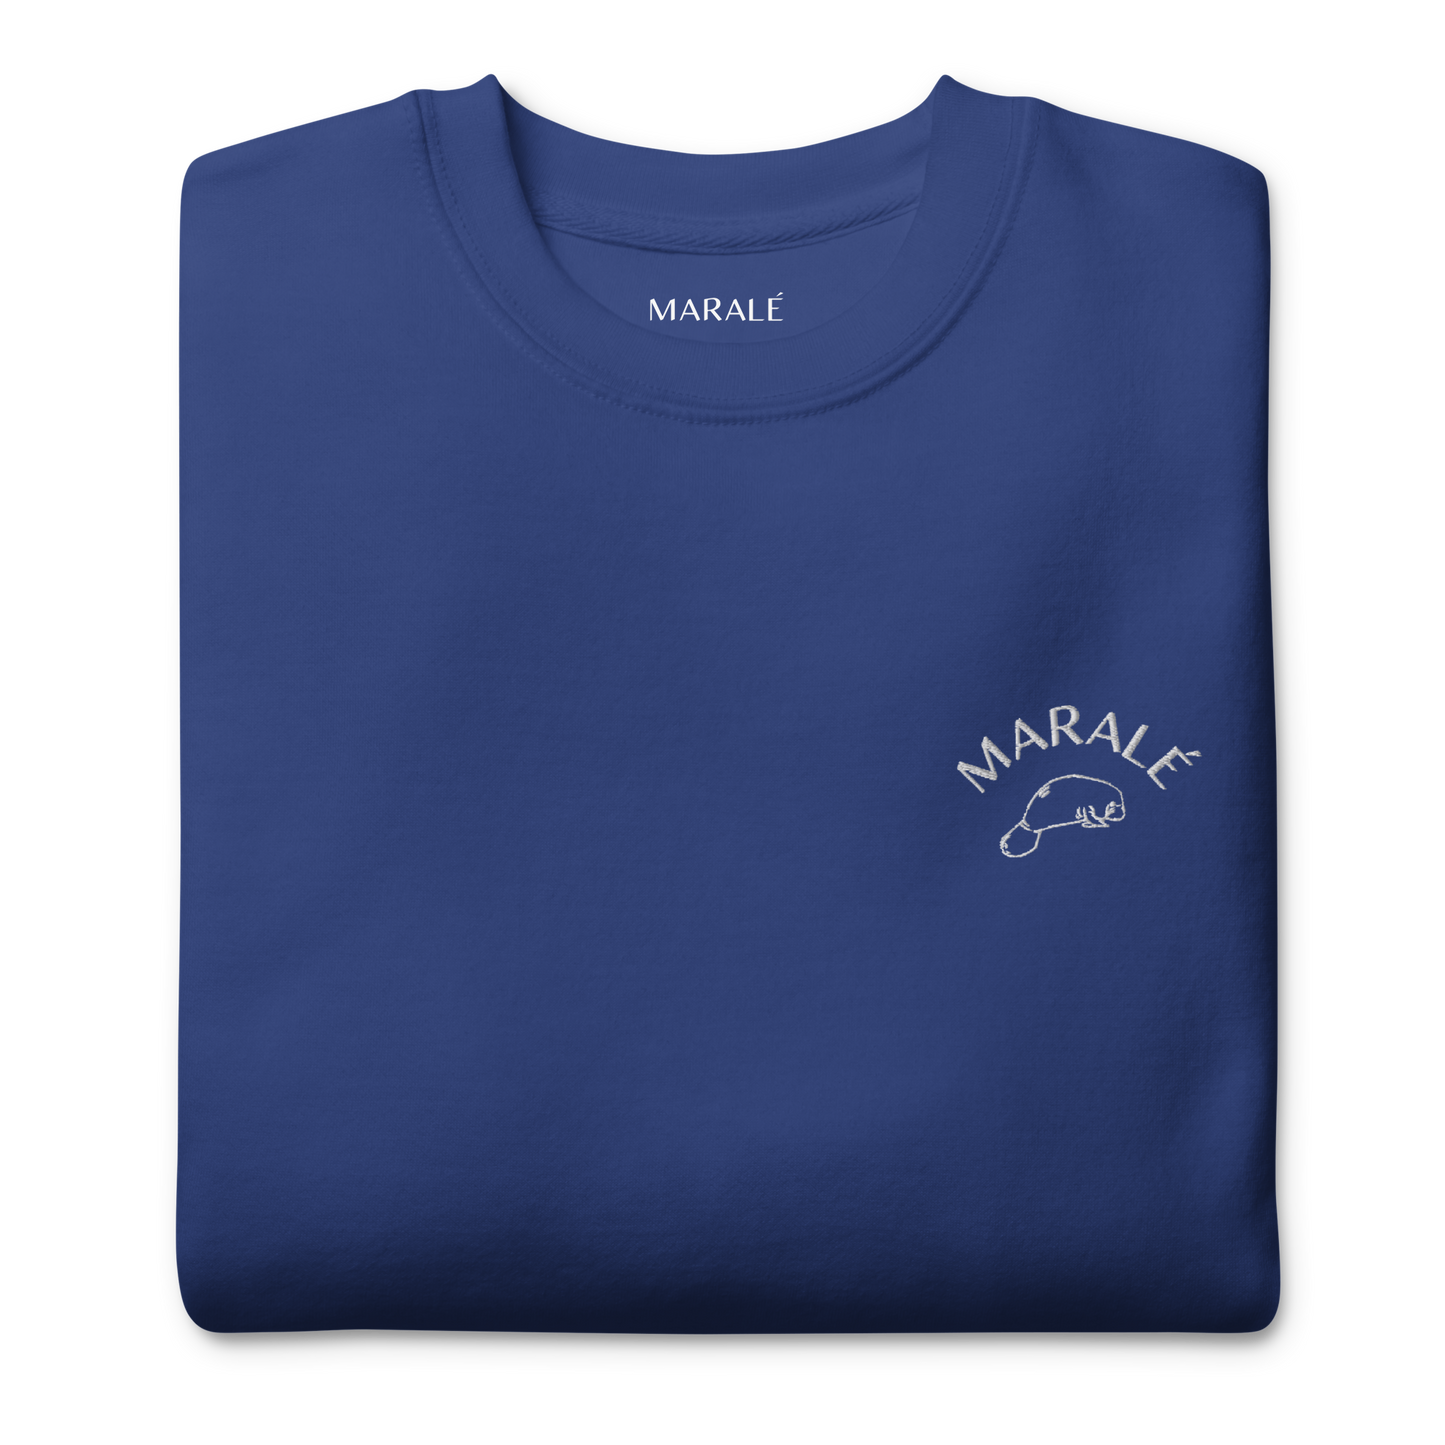 Maralé Manatee Embroidered Sweatshirt